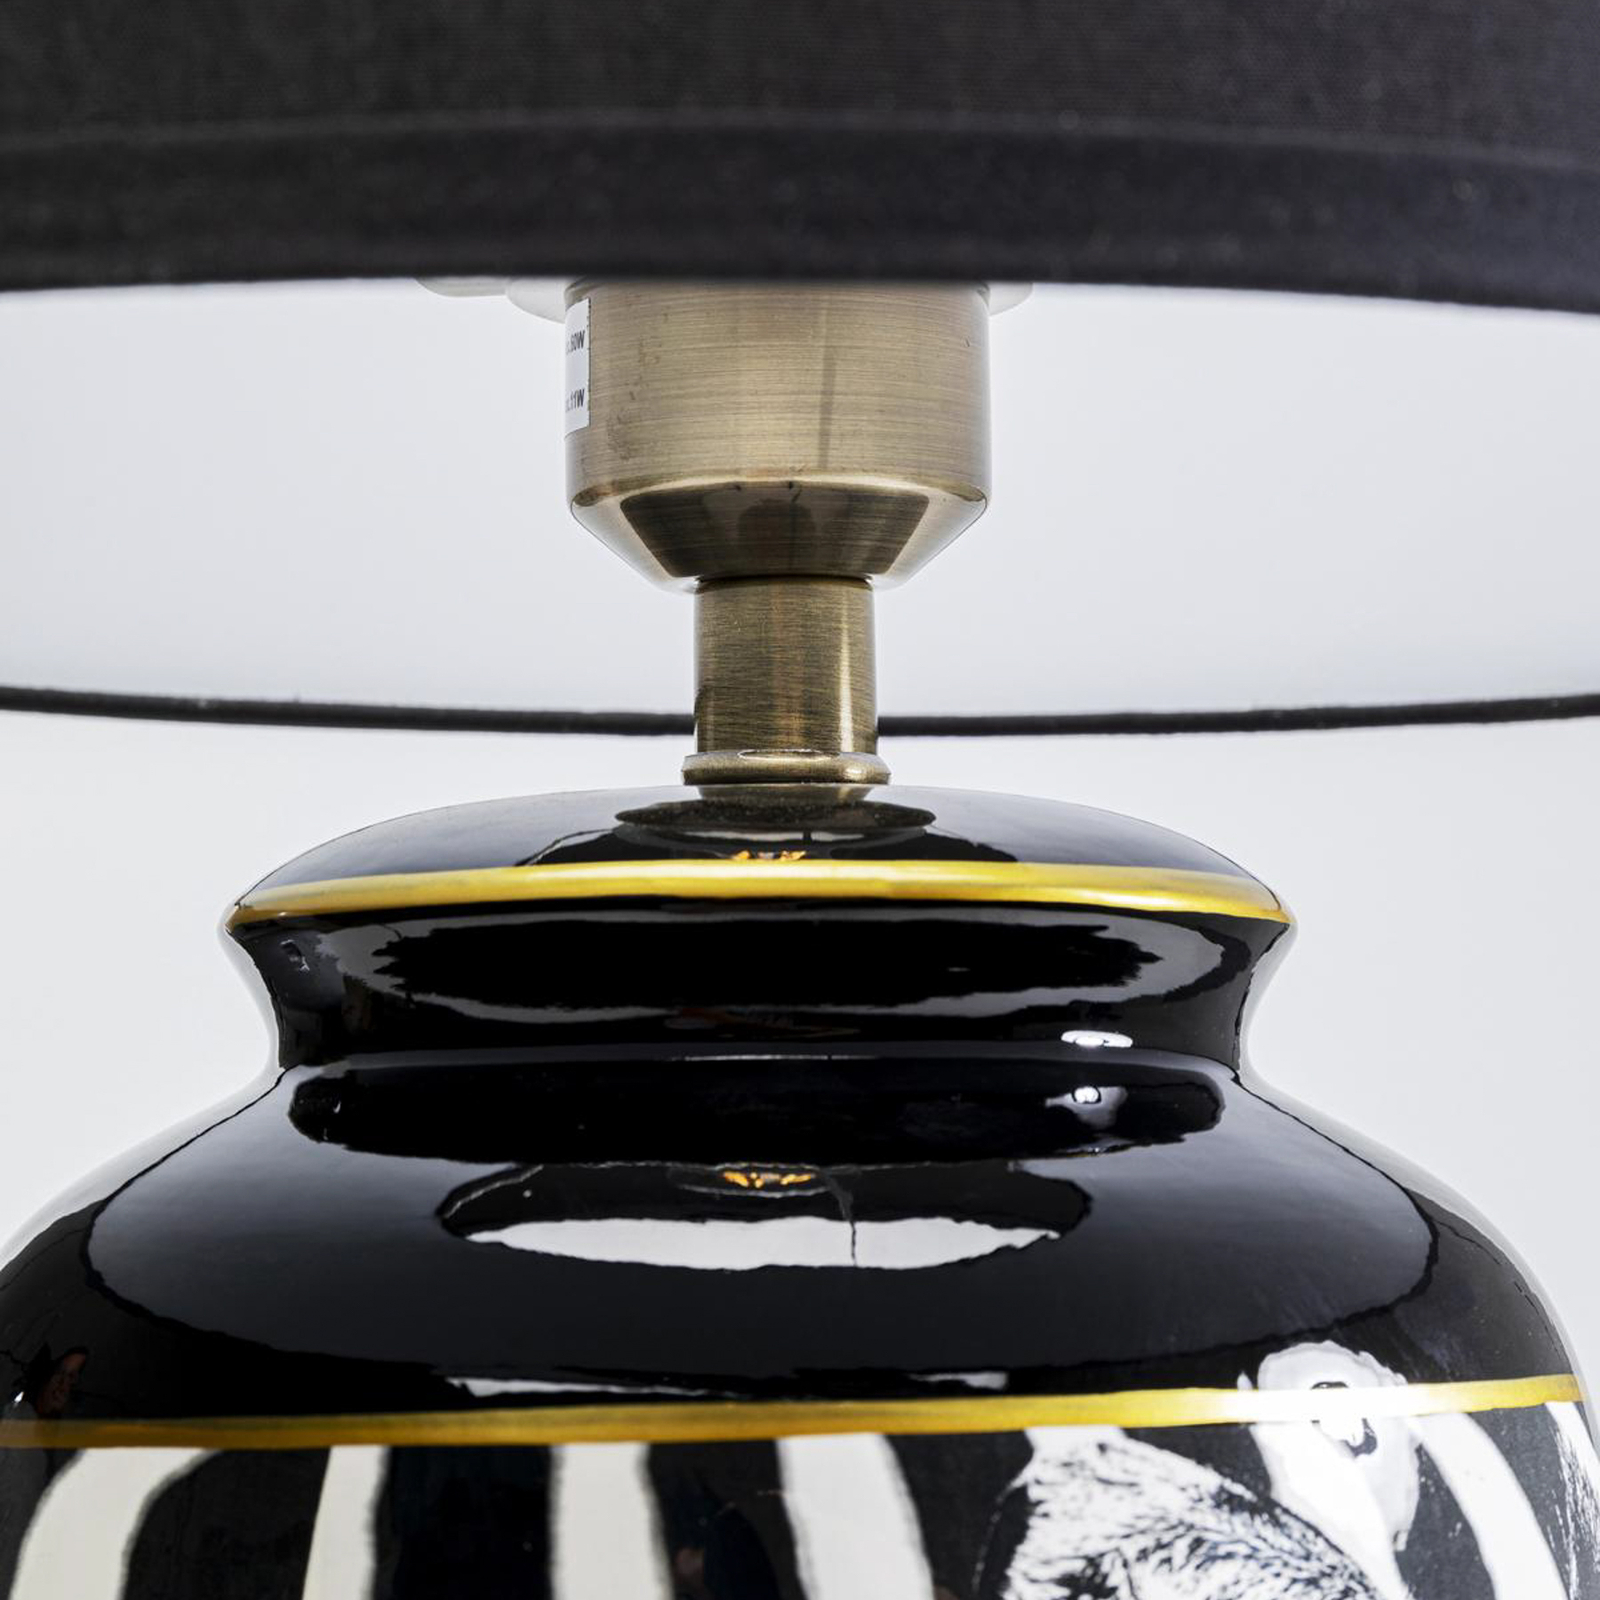 Kare lampa stołowa Zebra Face czarna tkanina, porcelana, 71 cm